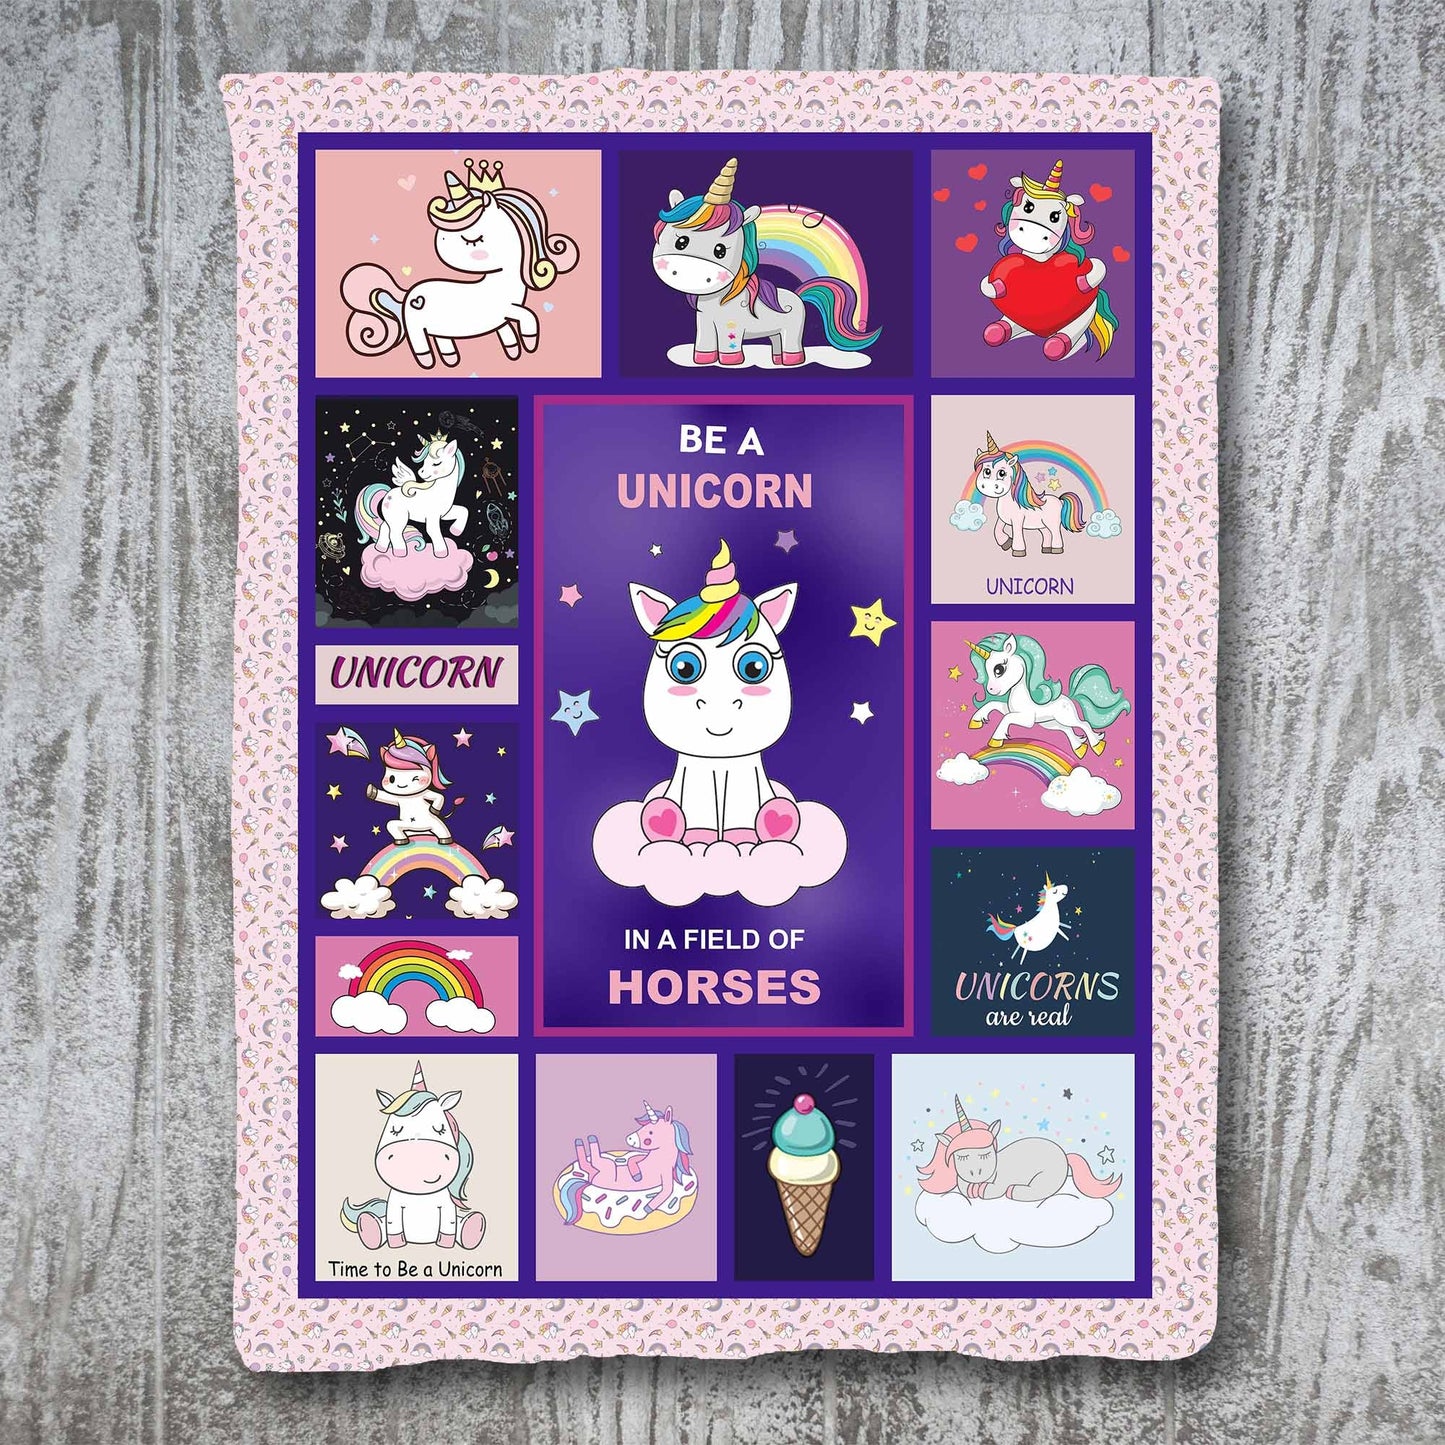 Customized Unicorn Toddler Blanket